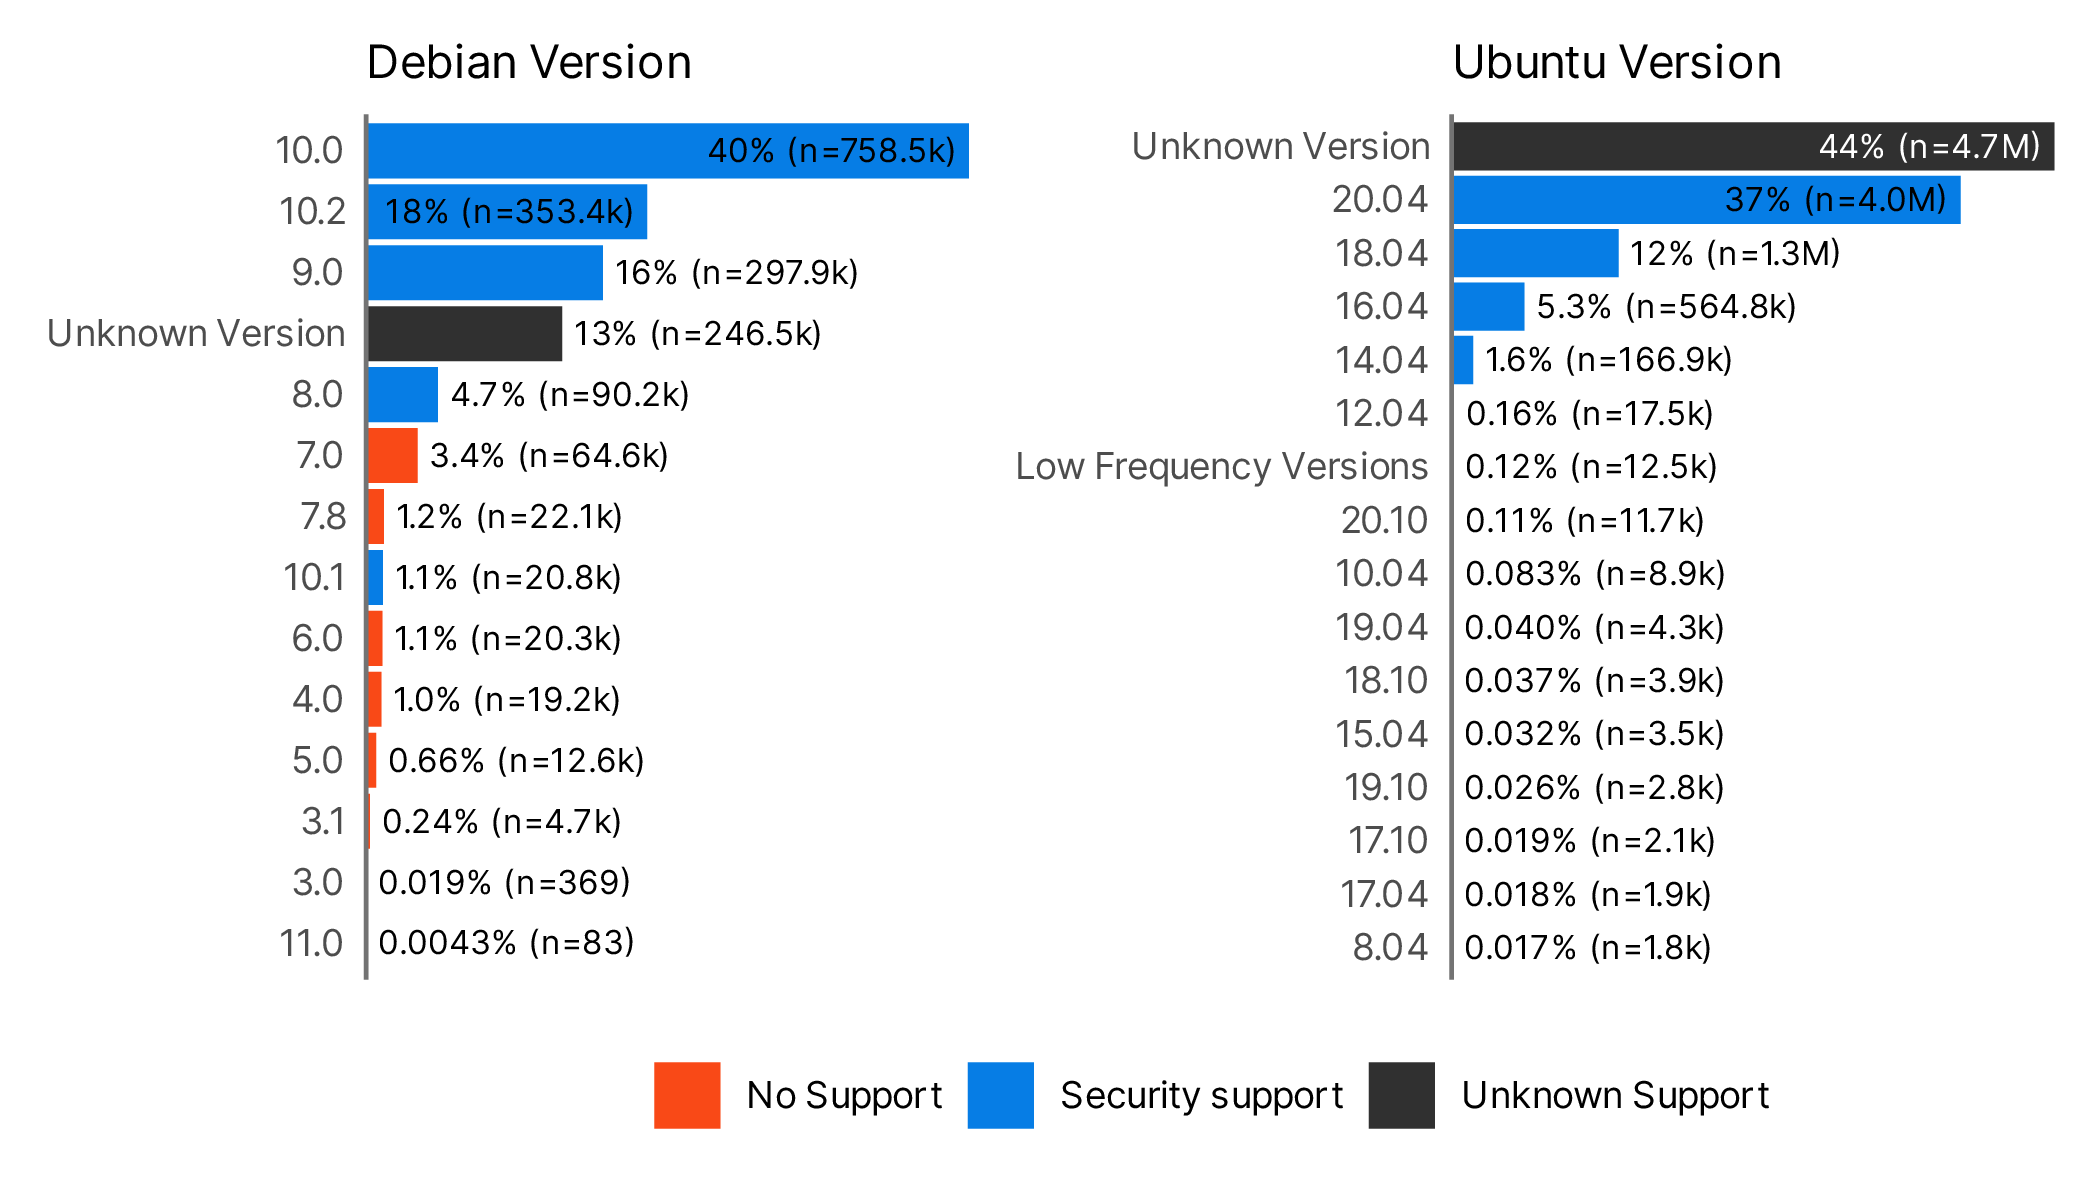 Bar chart showing ubuntu and debian version popularity of OpenSSH